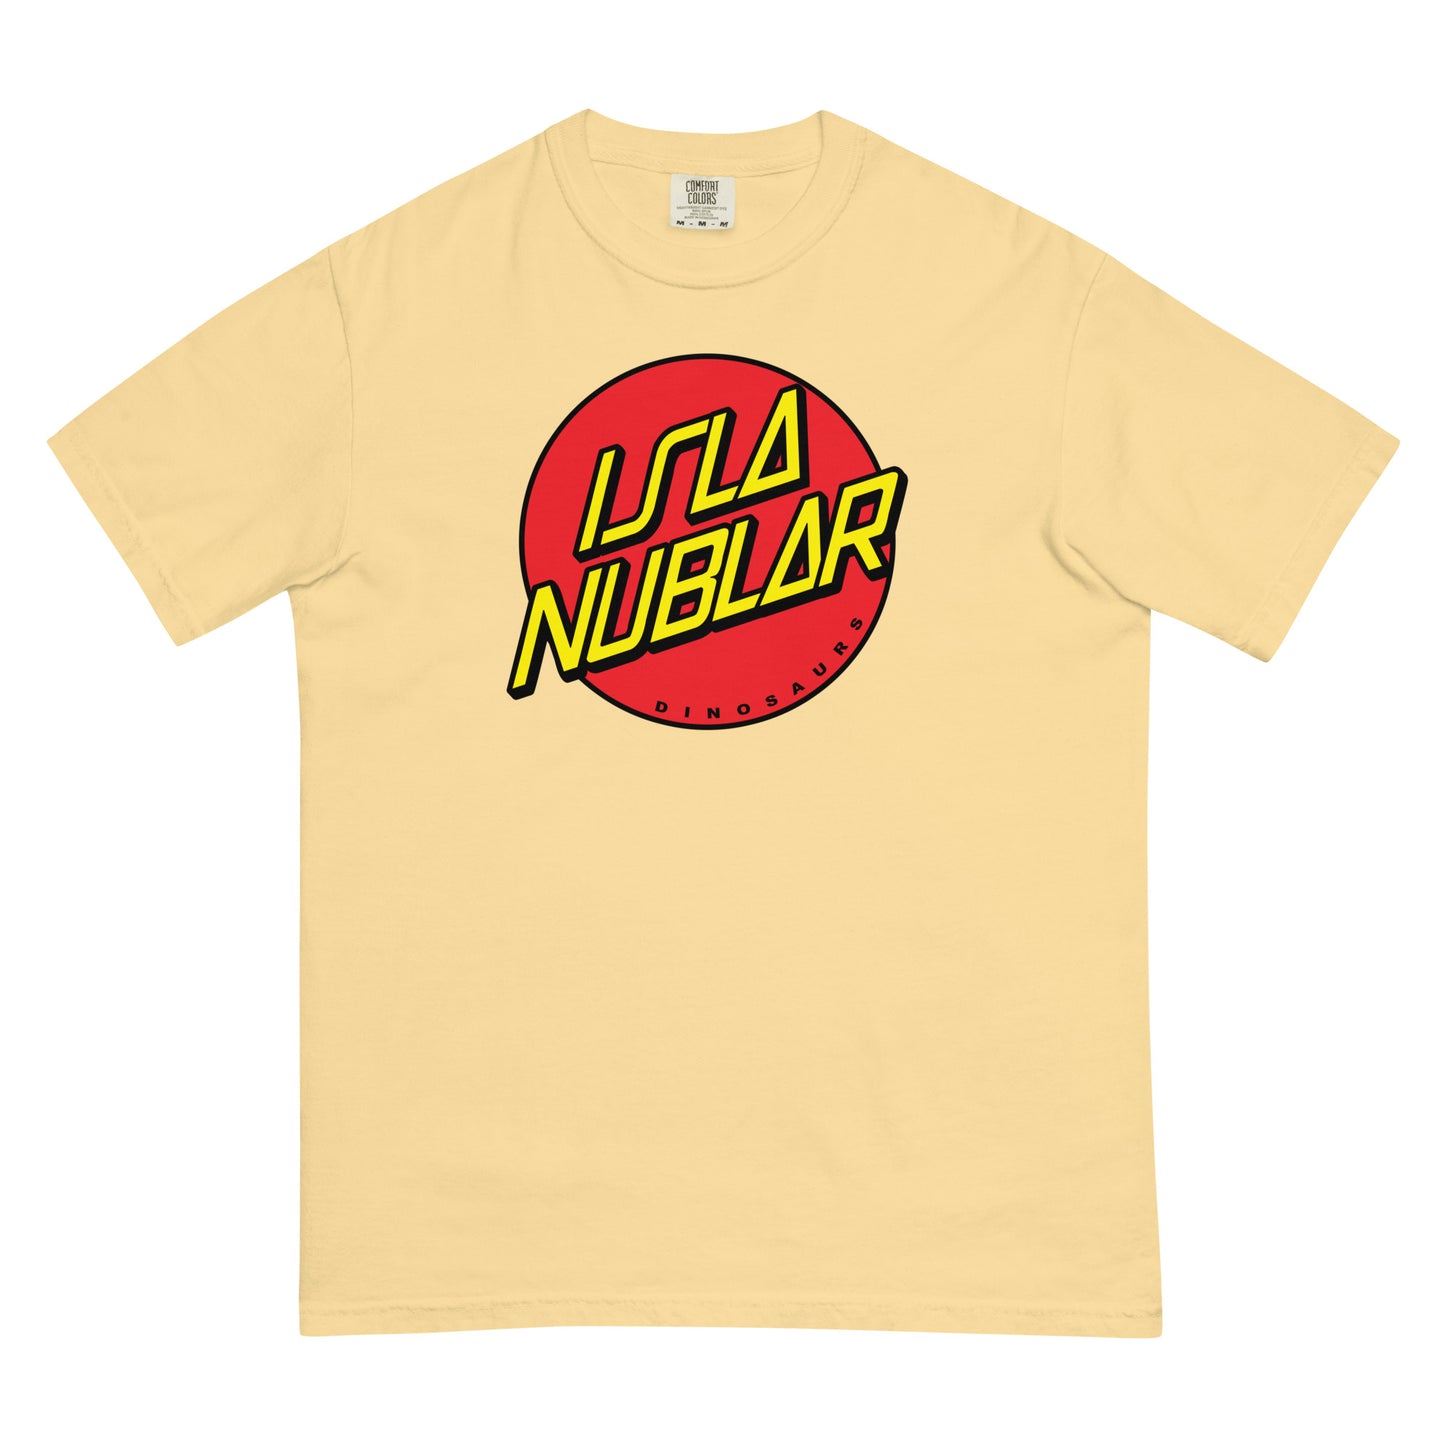 Isla Nublar Dinosaurs garment-dyed heavyweight t-shirt